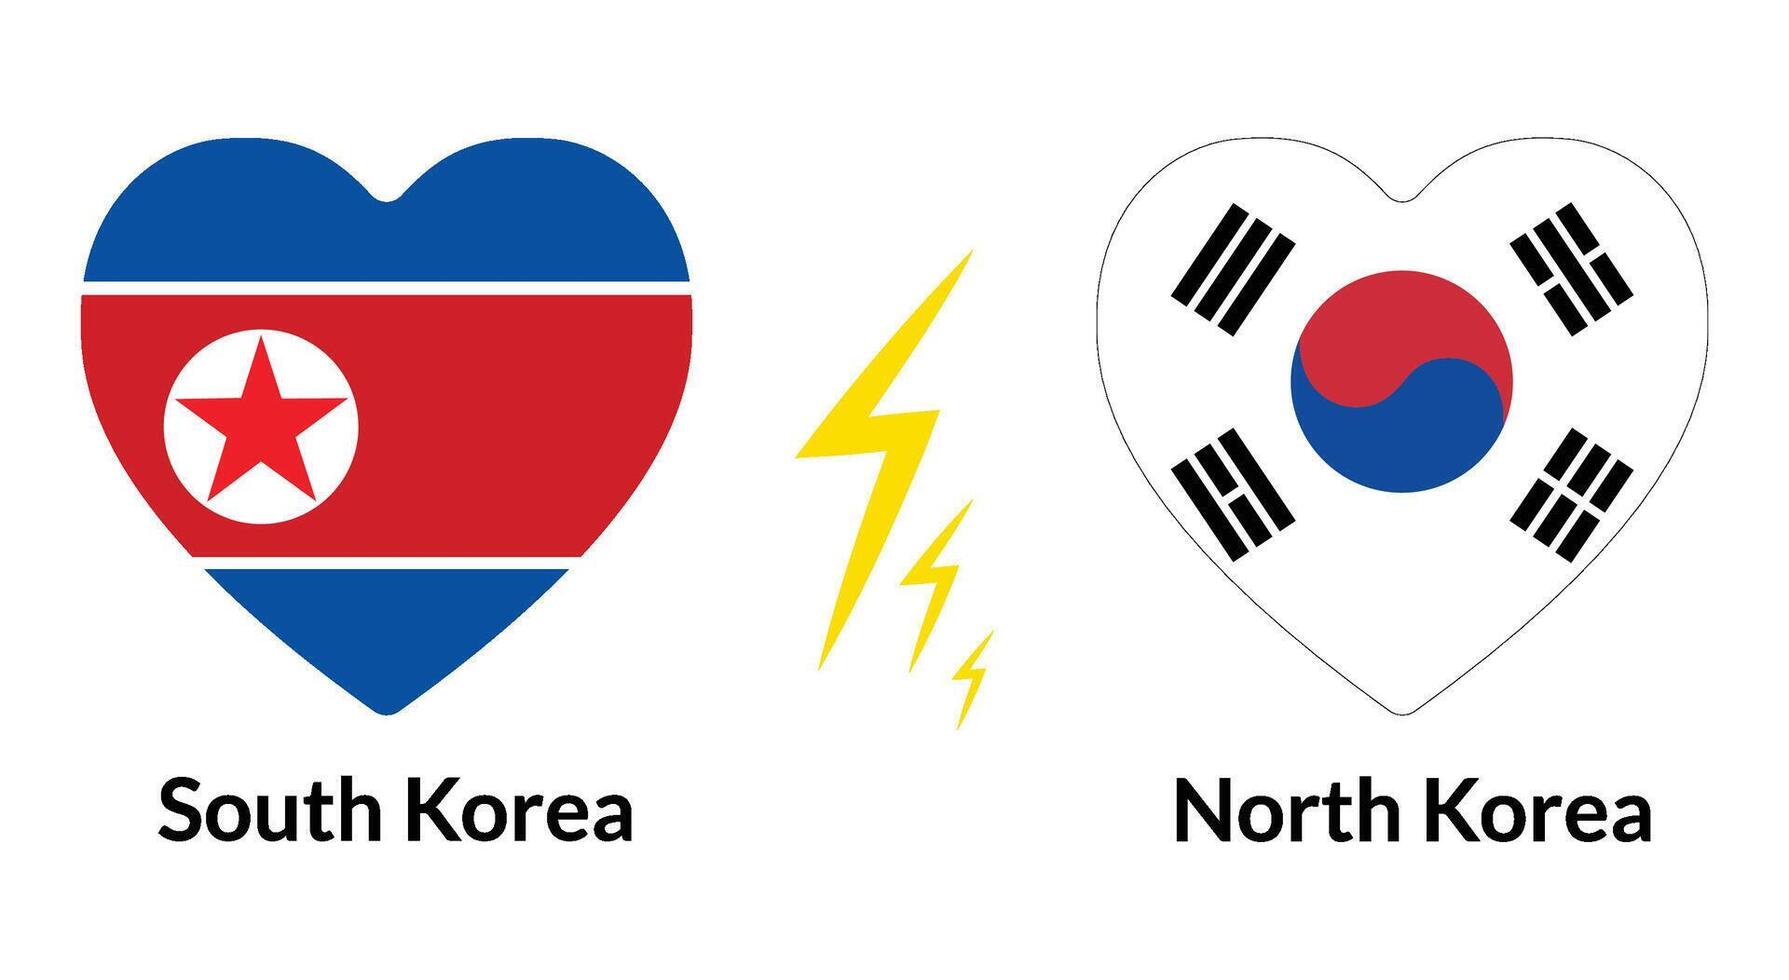 Süd Korea vs. Norden Korea. Flaggen von Süd Korea und Norden Korea im Herz gestalten vektor